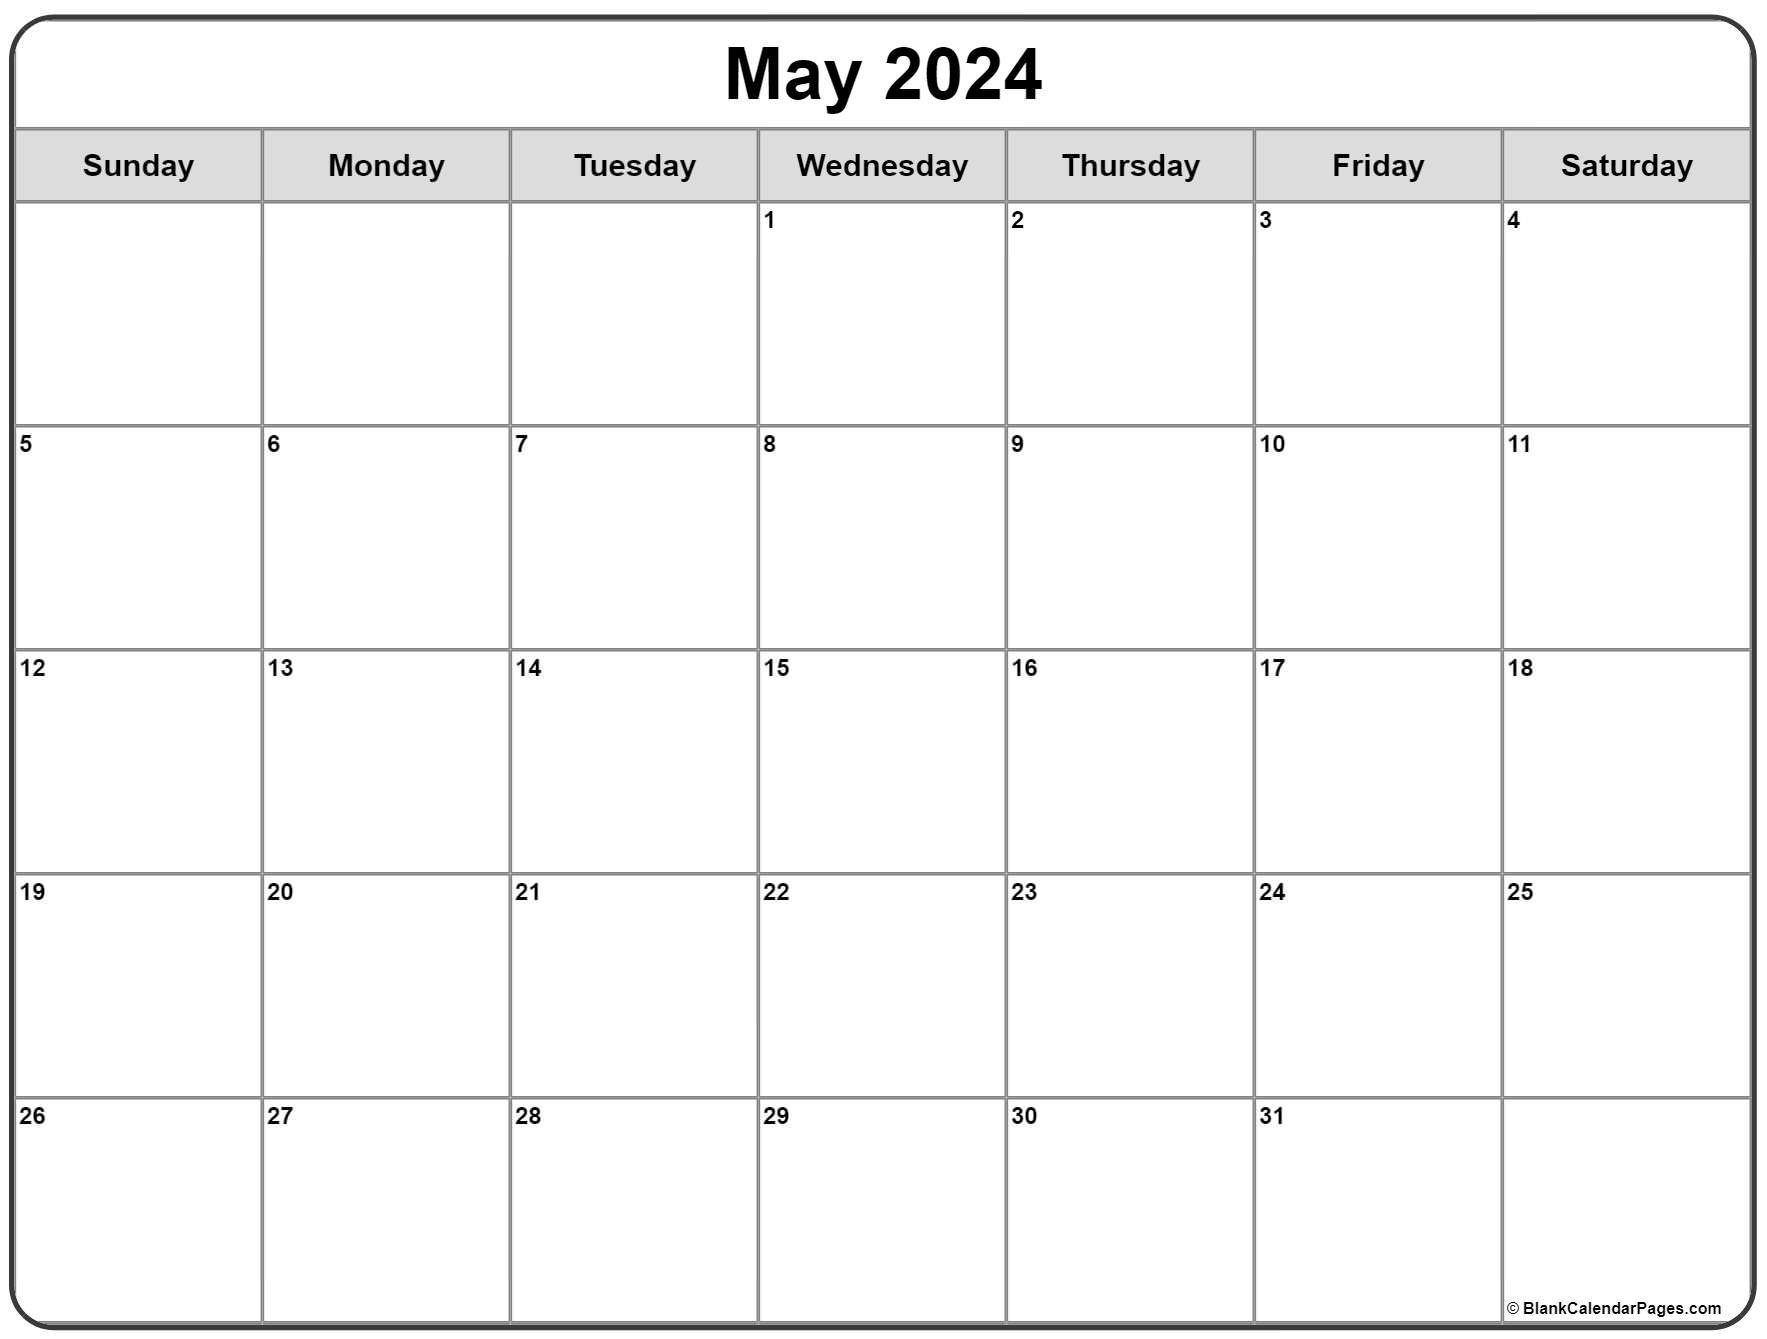 How Many Weekdays Until May 1 2024 Kitti Lindsay